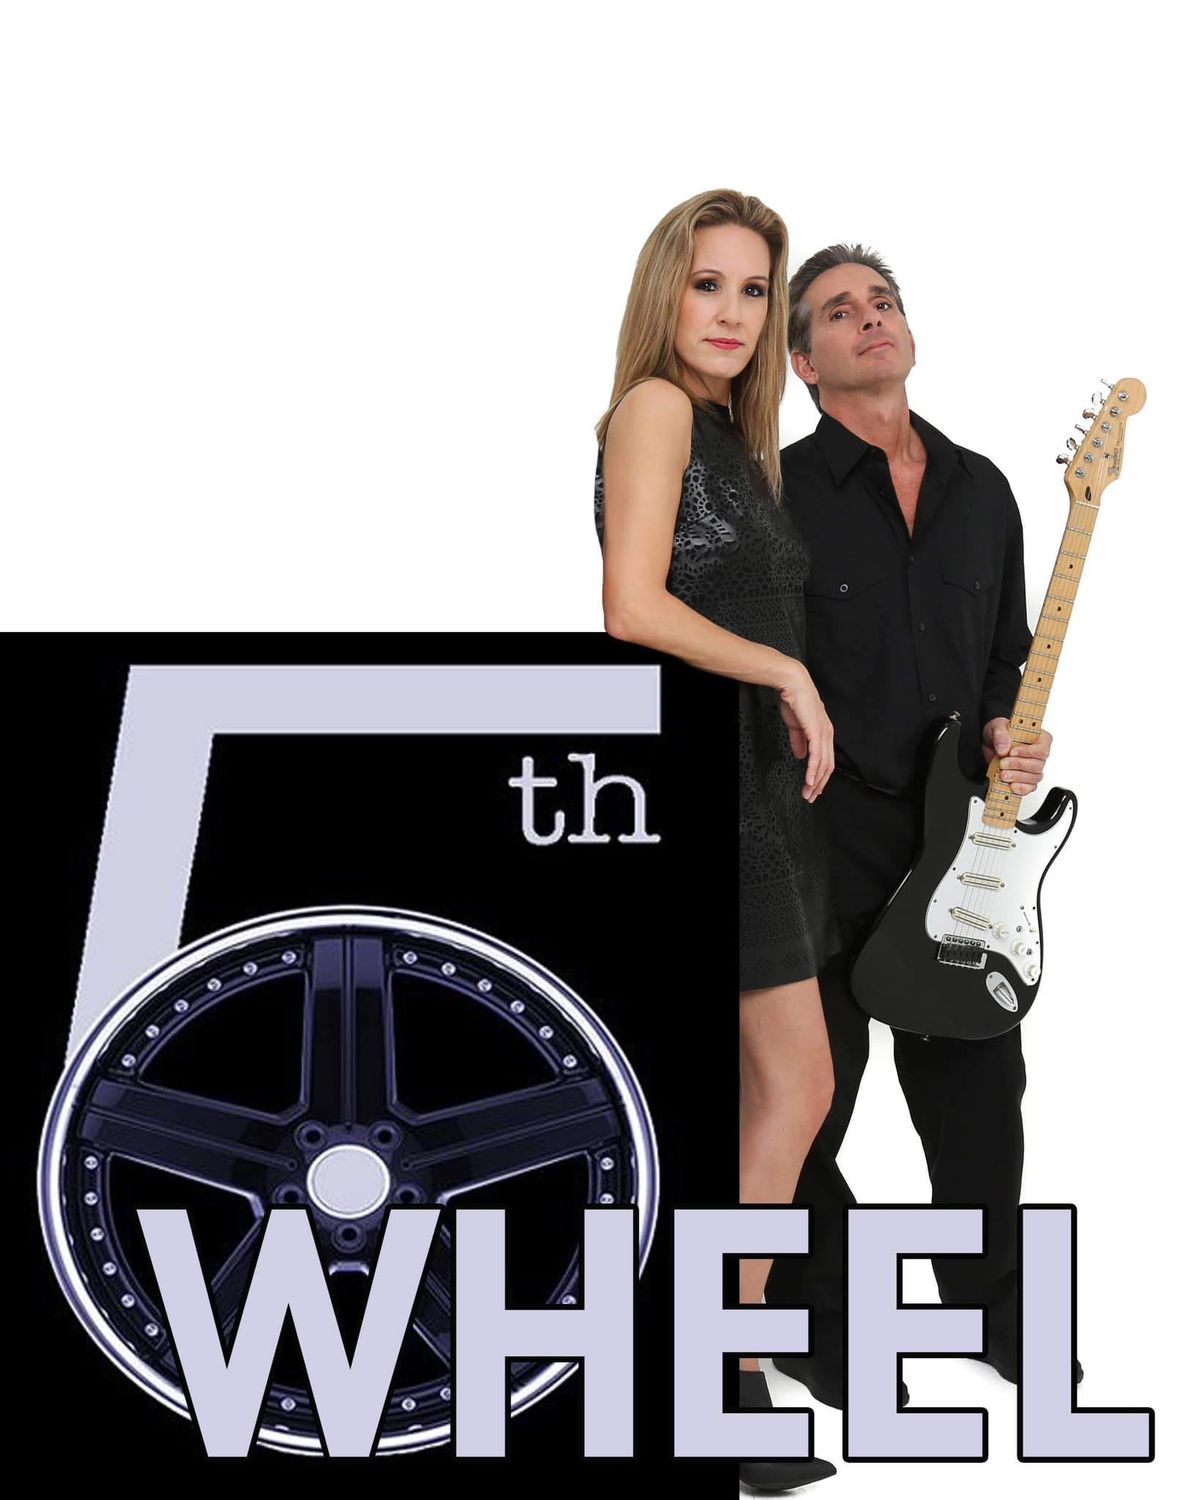 Fifth Wheel returns to Rock & Brews